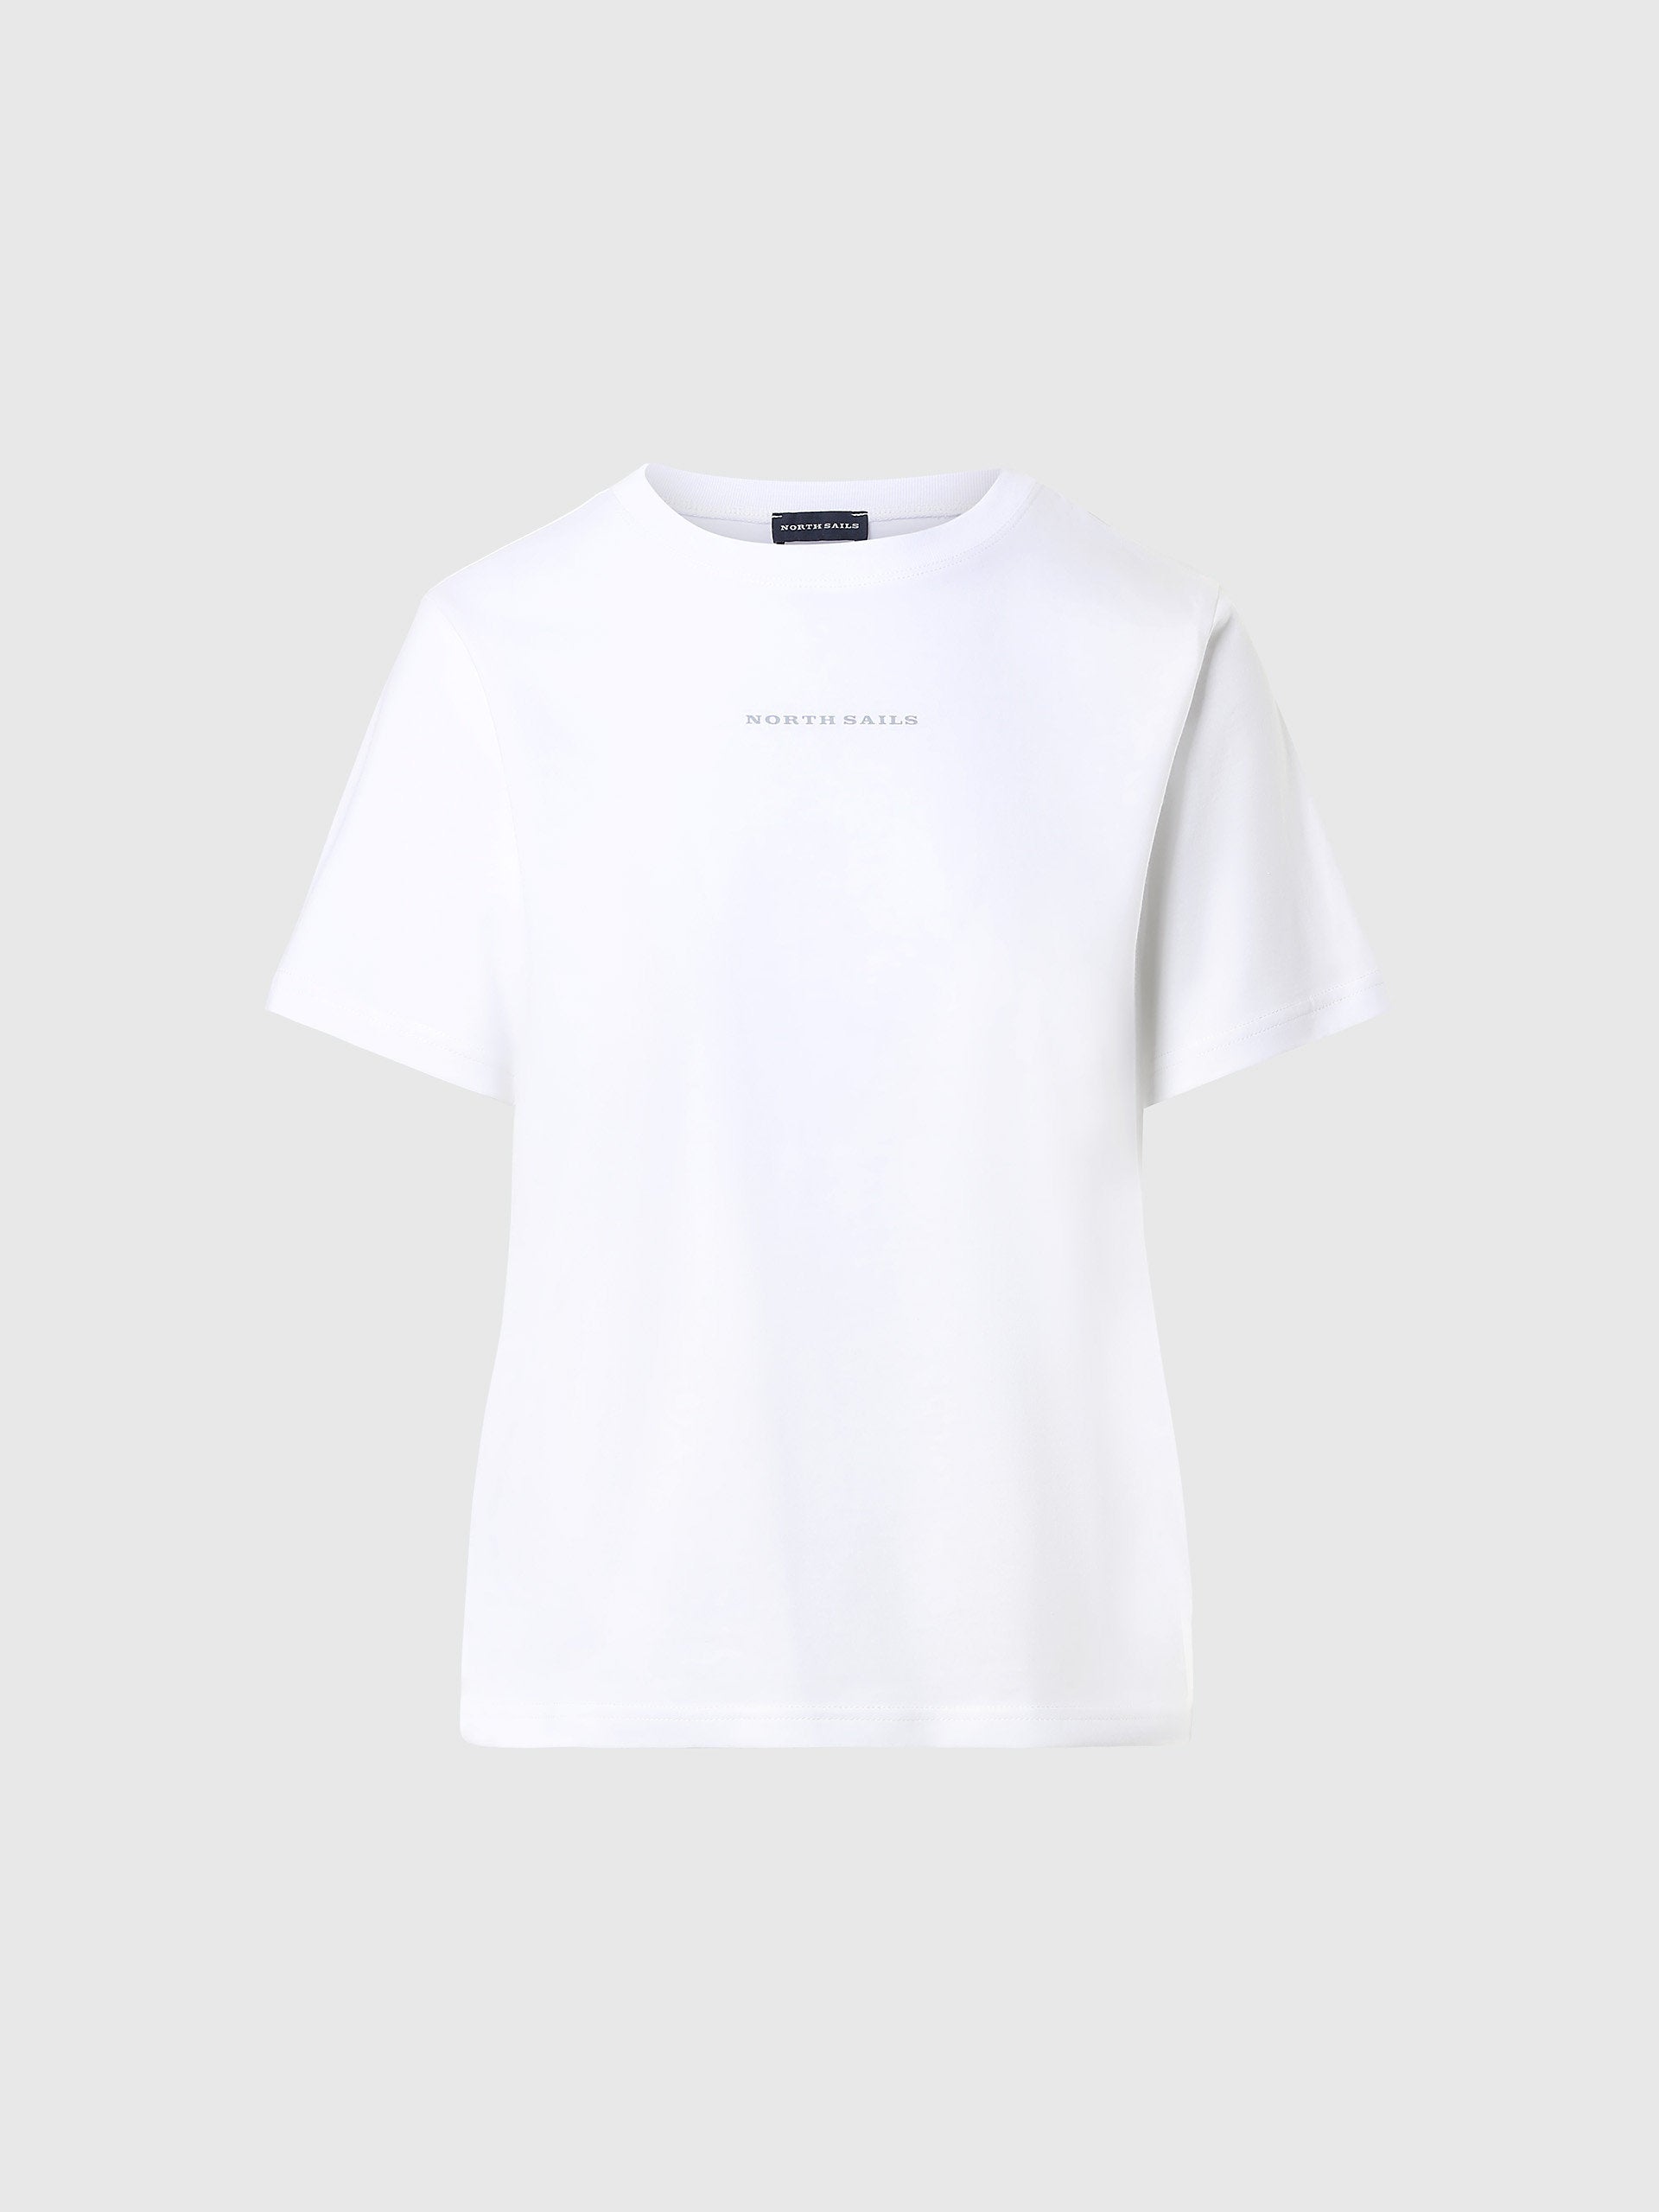 North Sails - Organic cotton T-shirtNorth SailsWhiteM